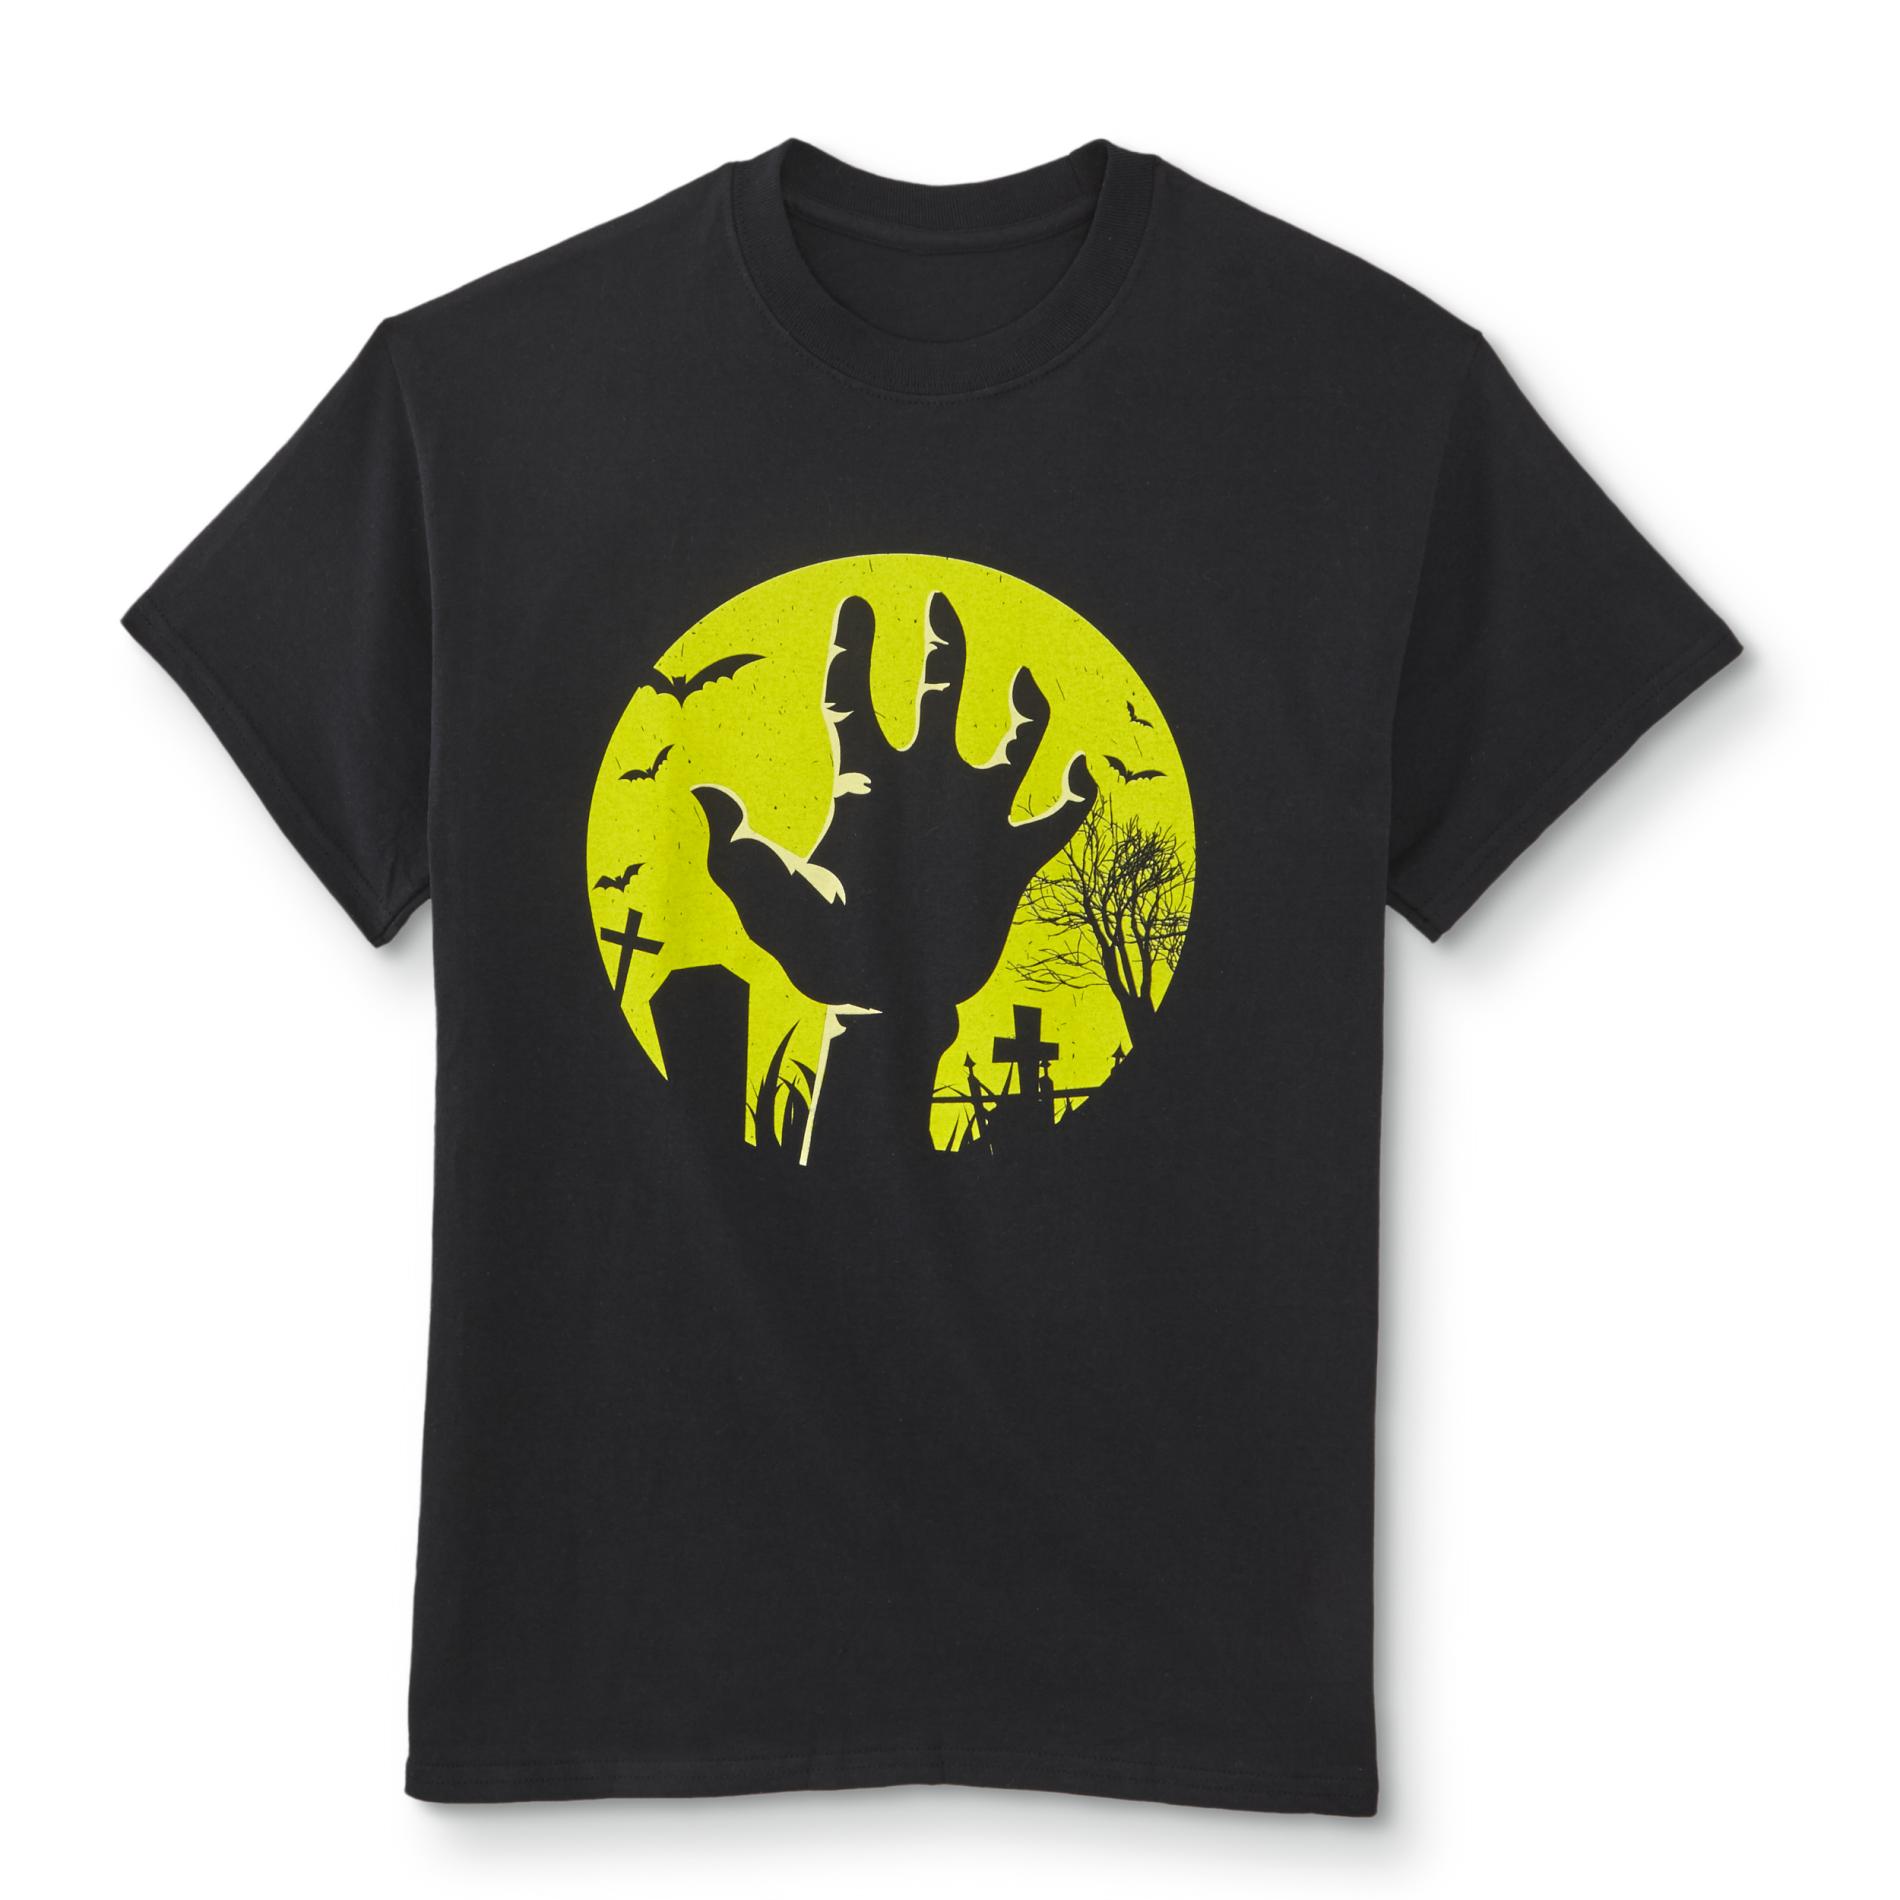 Young Men's Halloween Graphic T-Shirt - Zombie Hand